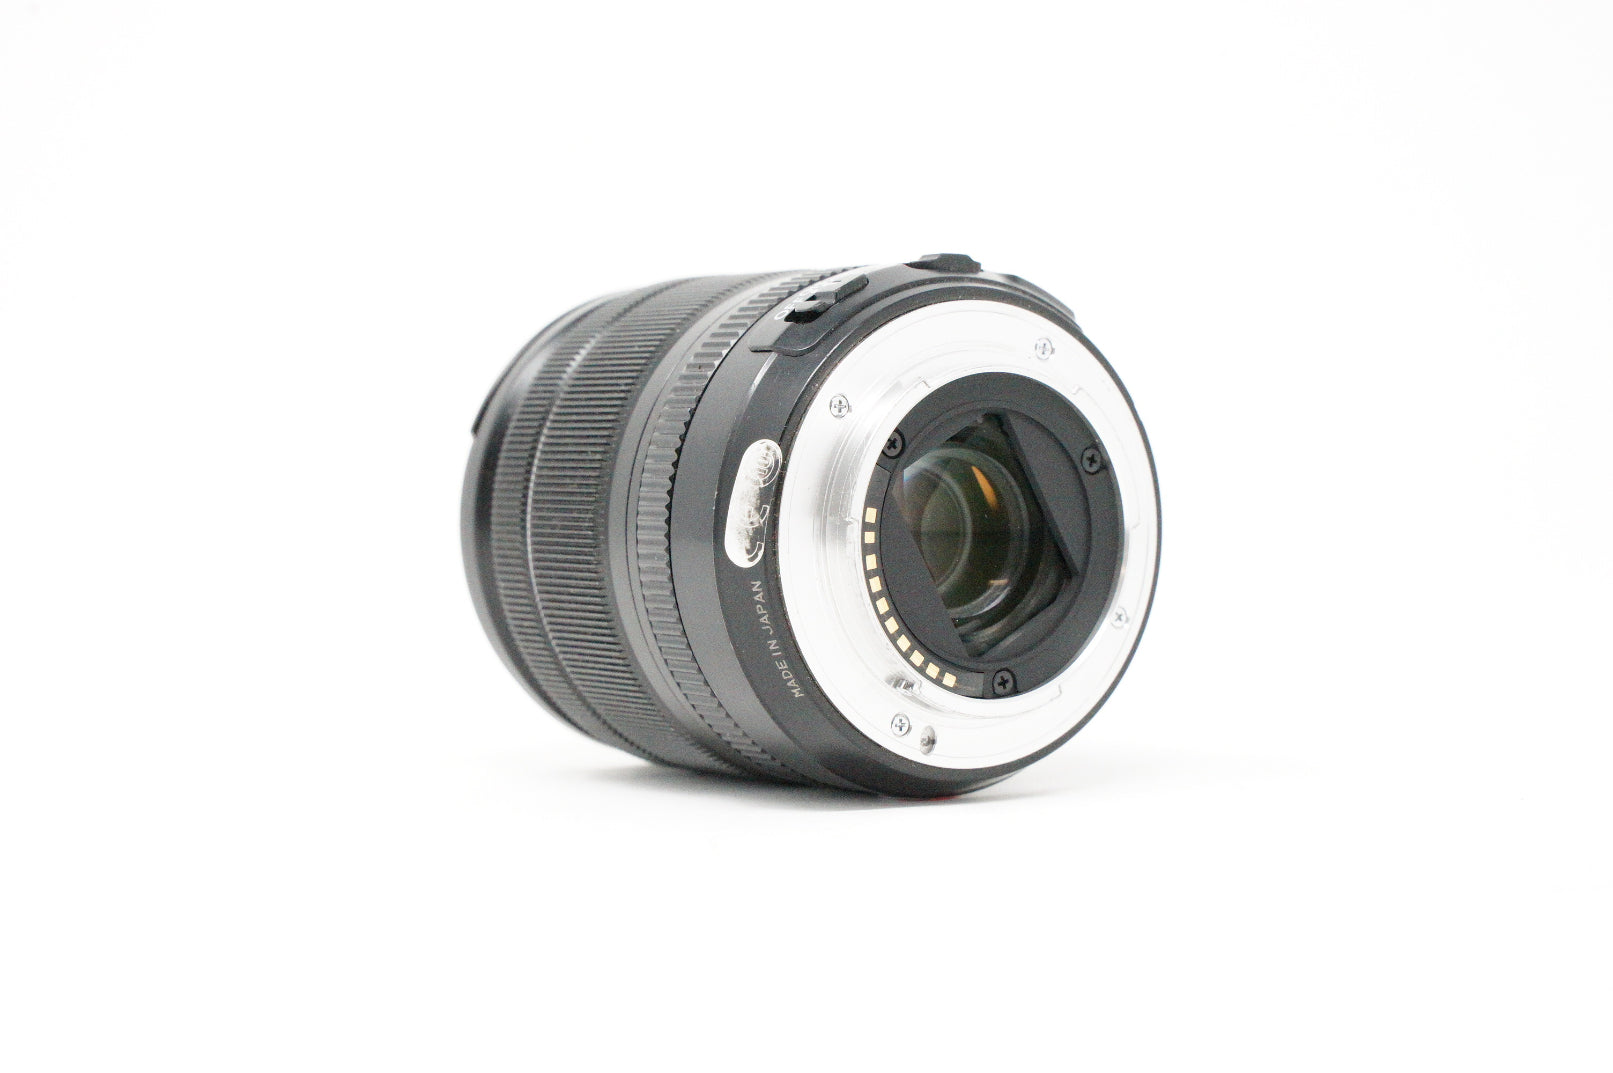 Fujifilm XF 18-55mm F2.8-4 R LM OIS Lens with hood (SH39788)